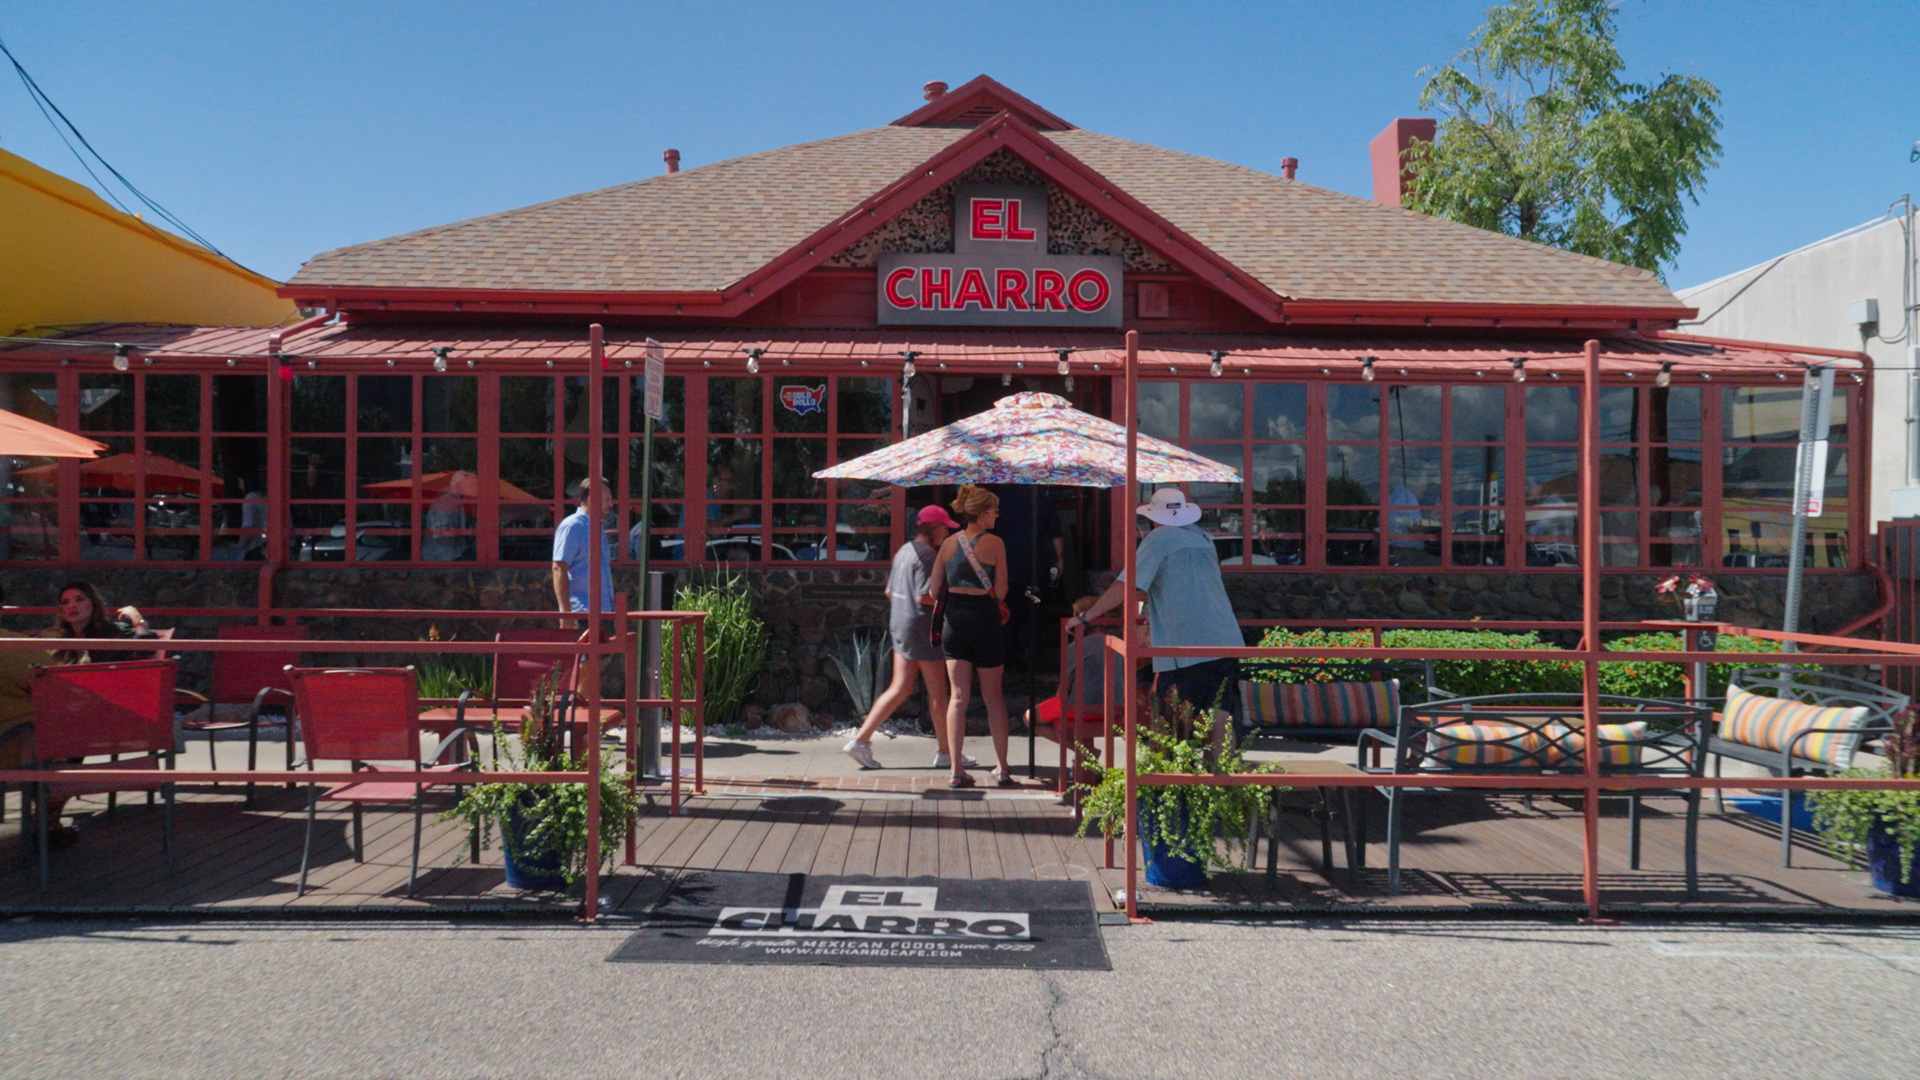 El Charro Café Turns 100 Years Old